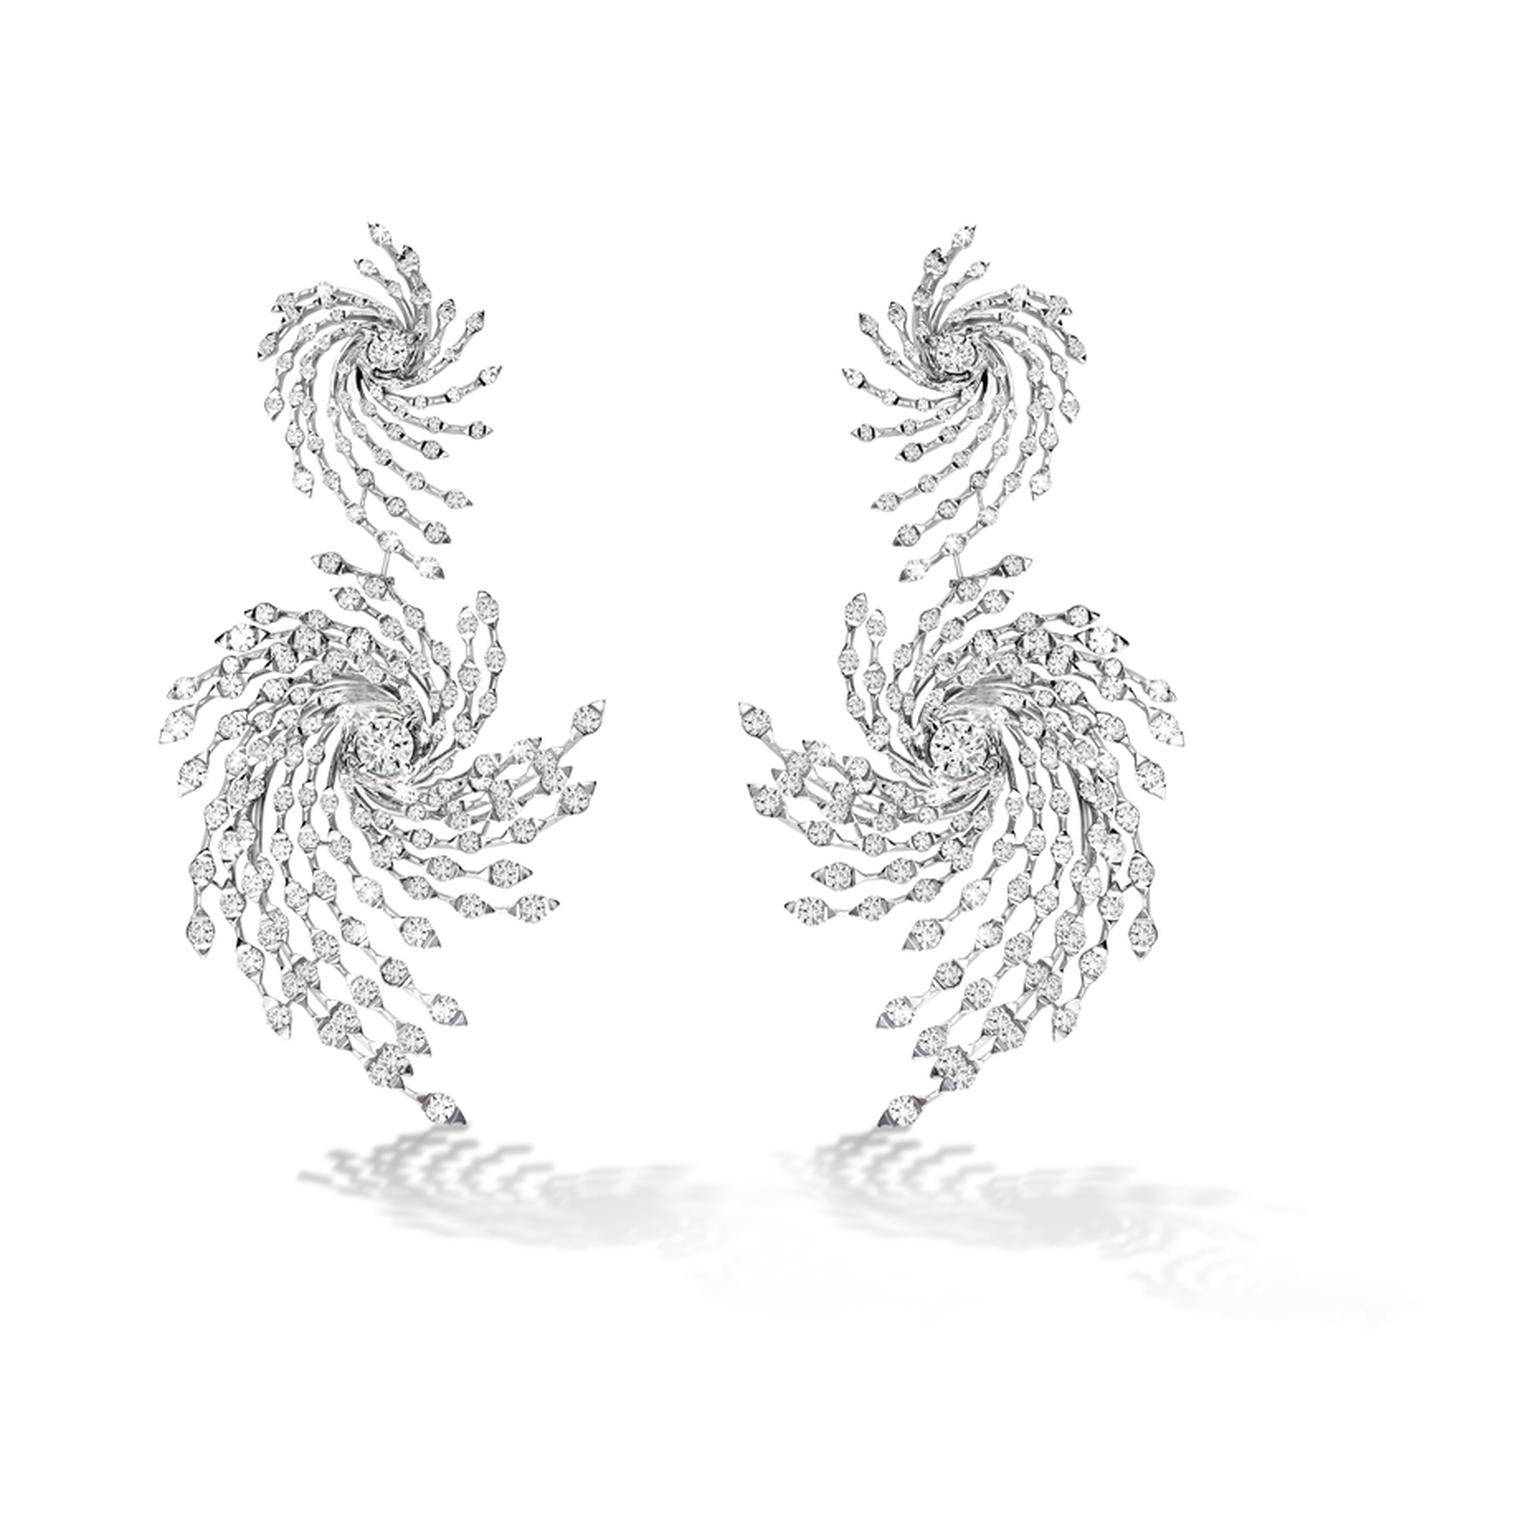 Brilliant-cut diamond Asprey Storm earrings in white gold